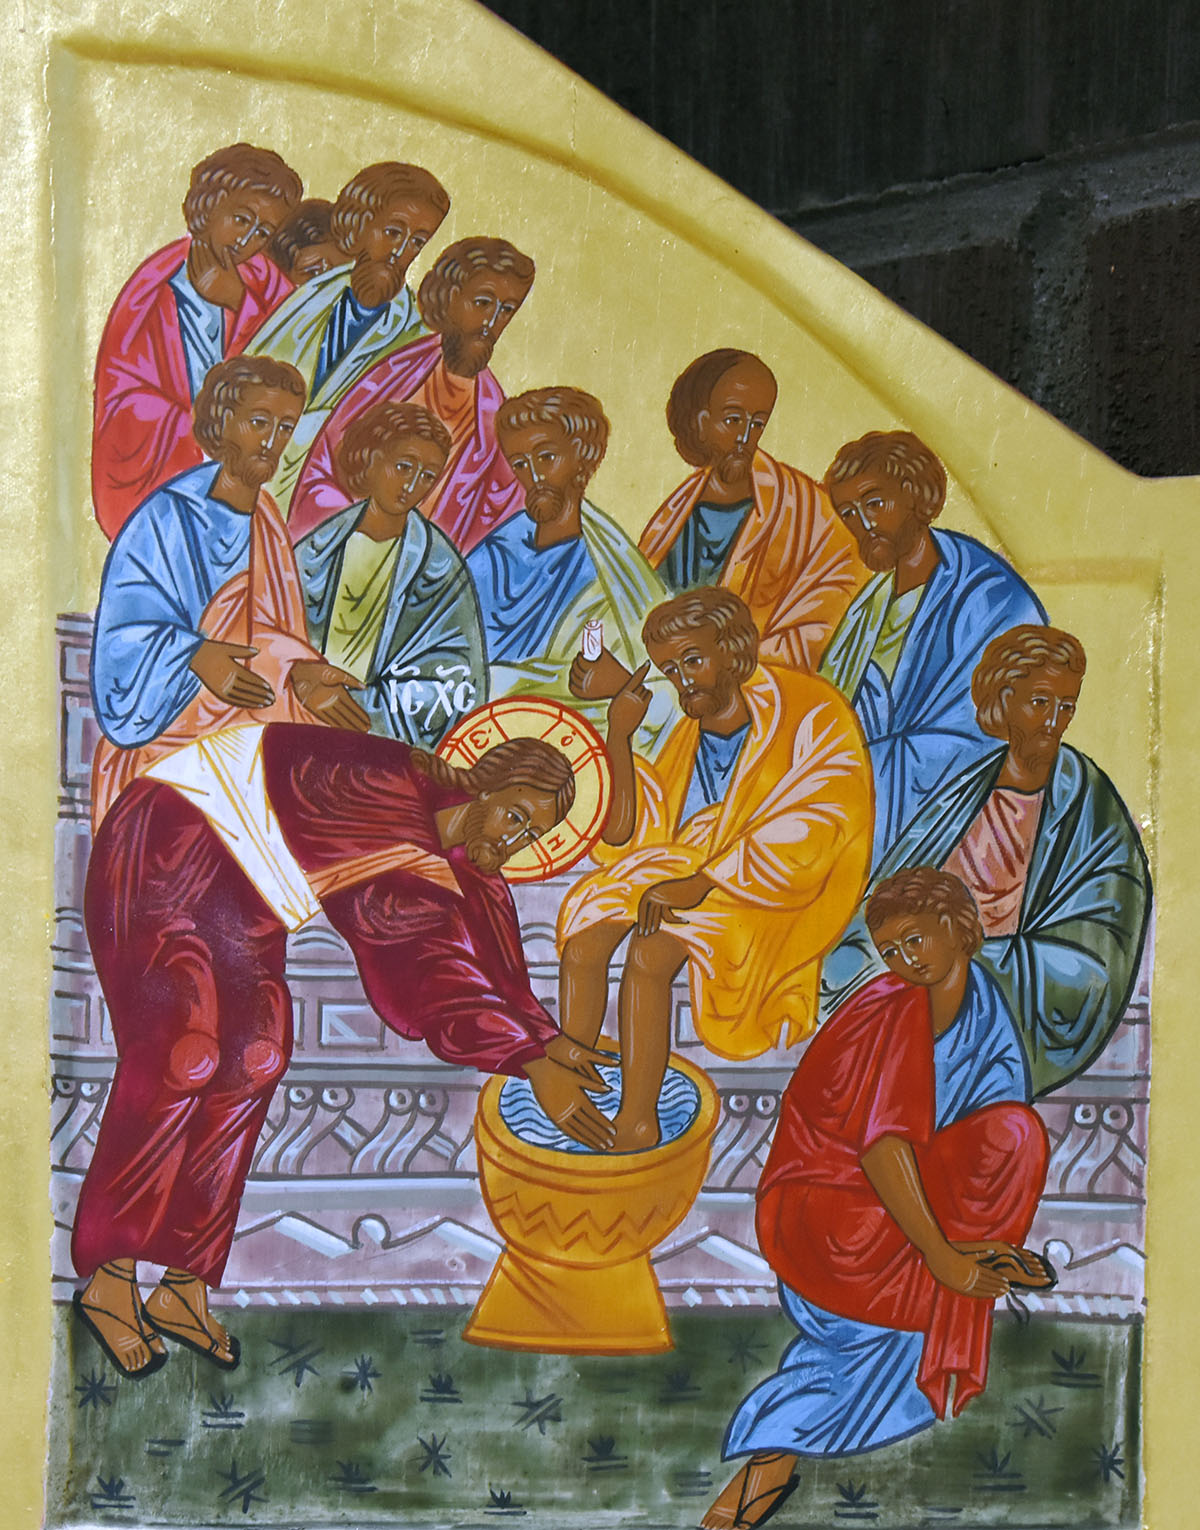 Närbild av motivet Fotatvagning i Erland Forsbergs altarskåp Passionsdramat i Alskathemmet